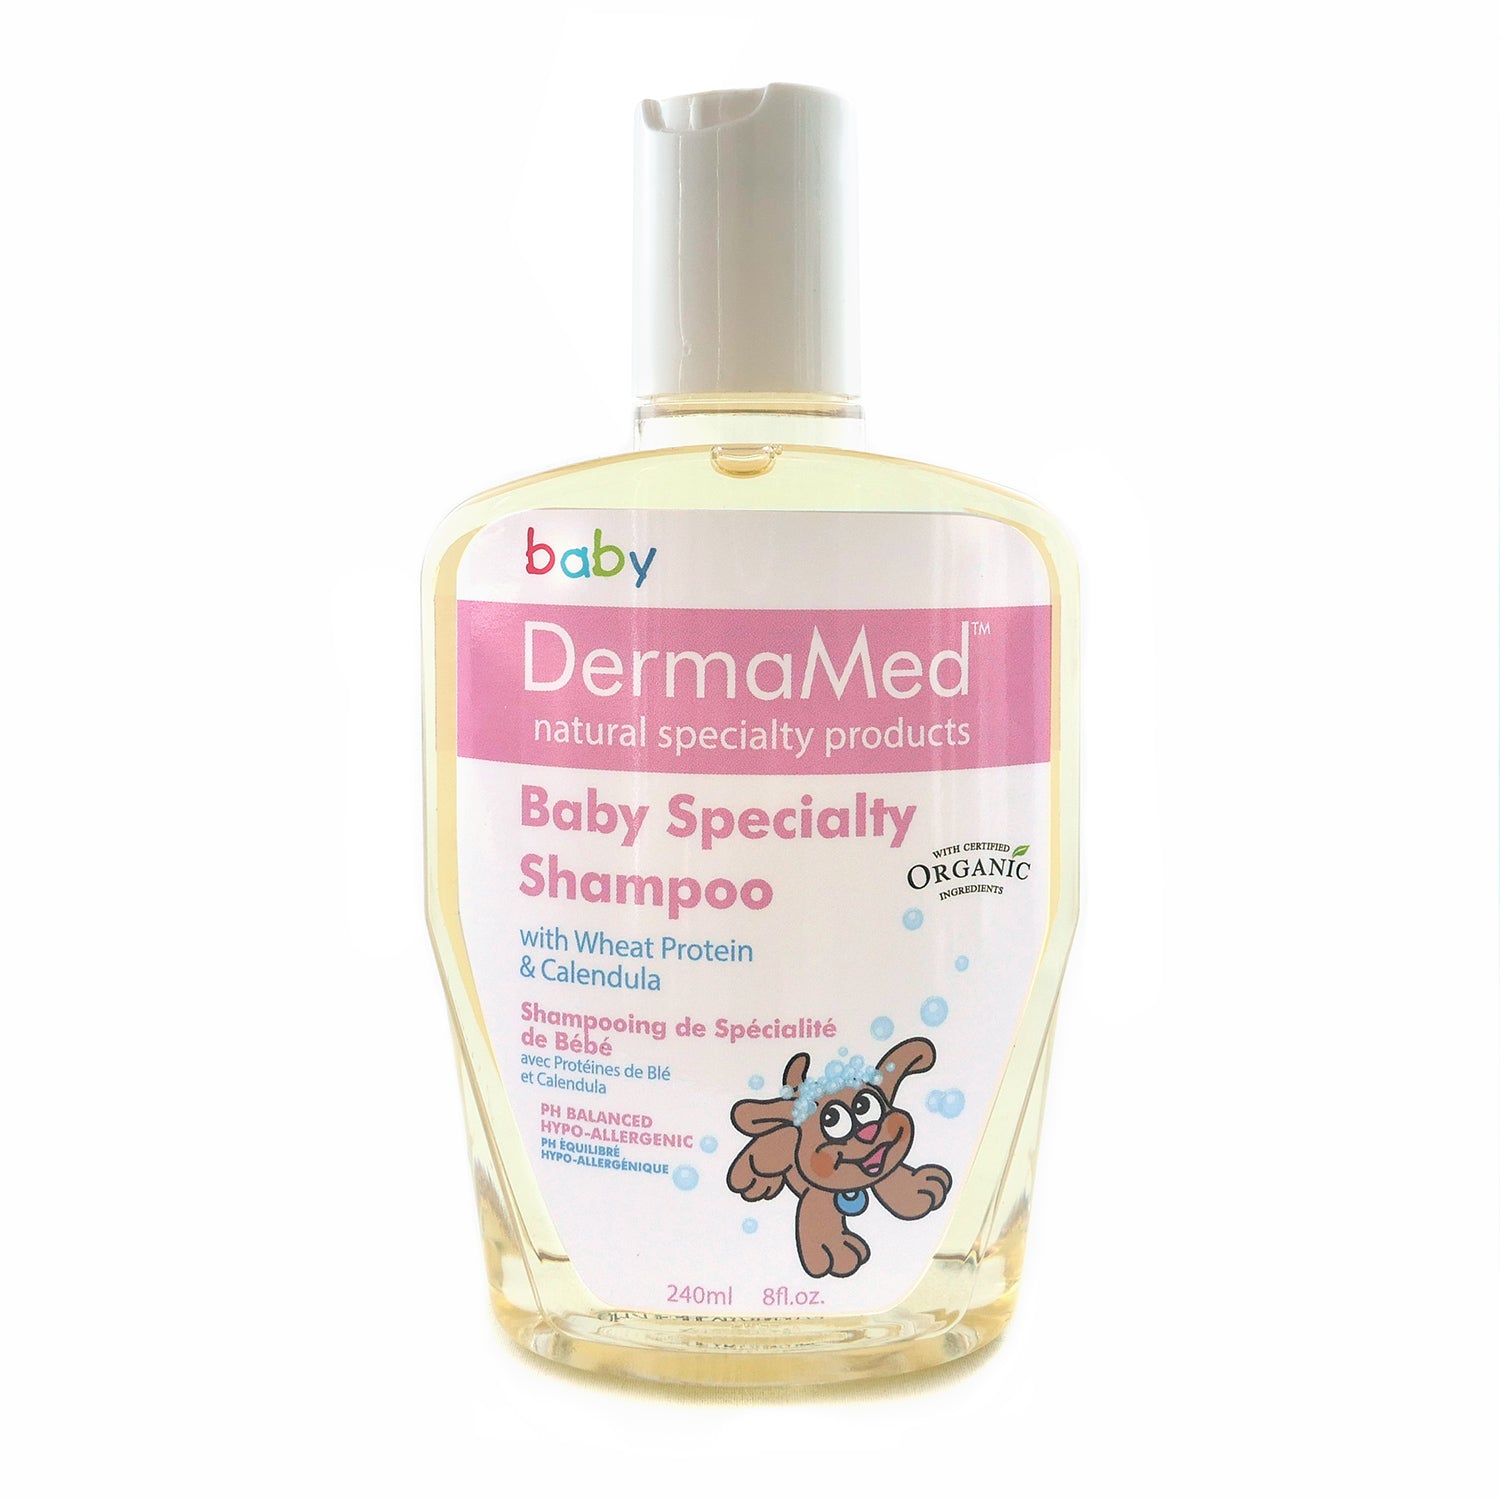 Baby Specialty Shampoo for Sensitive Skin - Dermamed Pharmaceutical